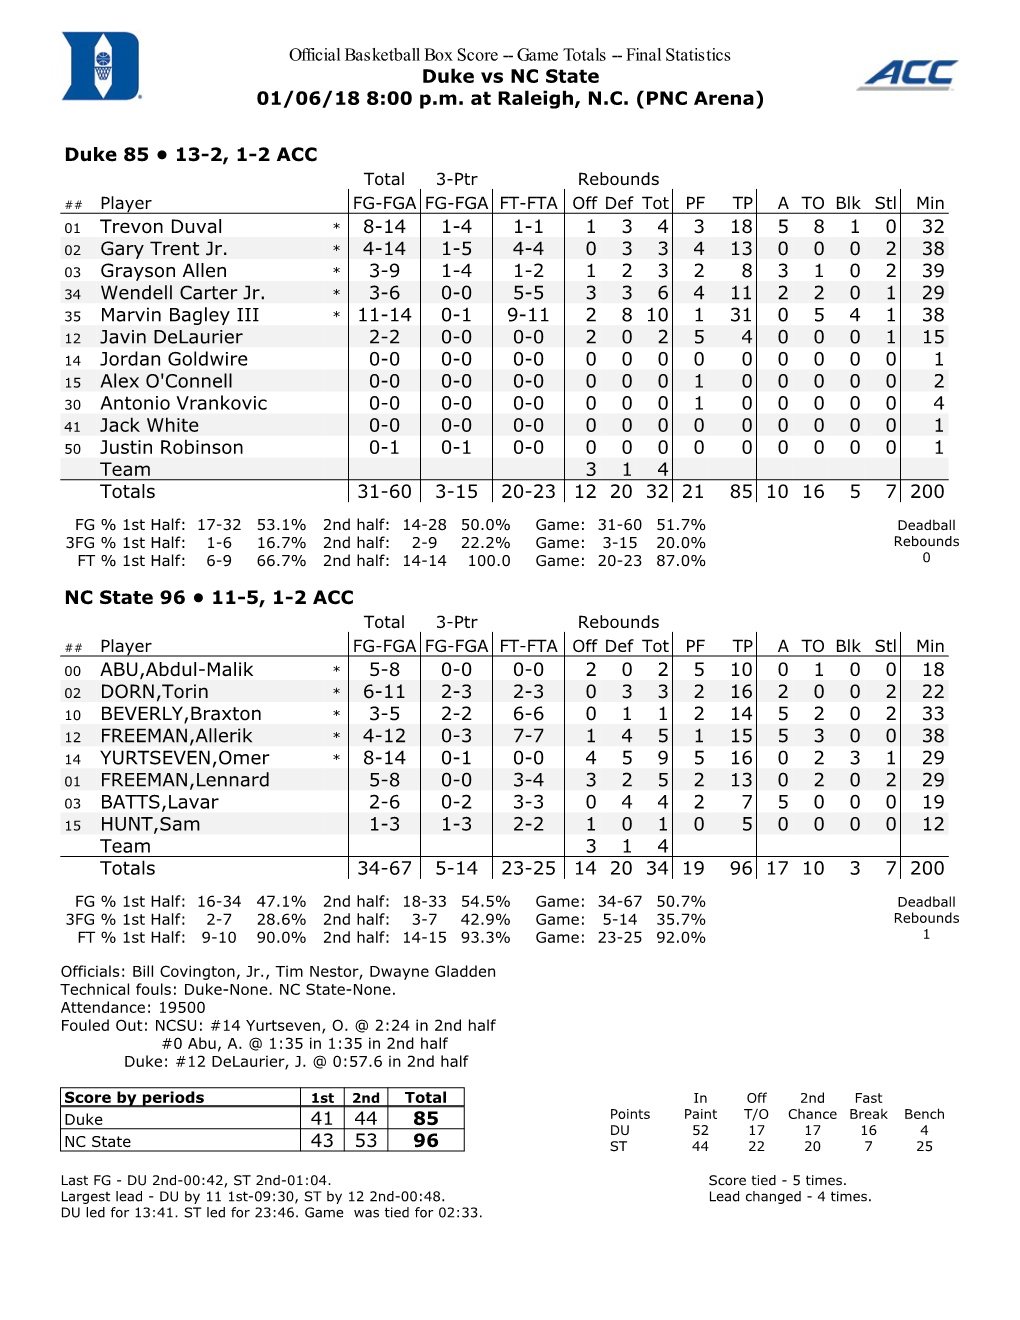 Official Basketball Box Score -- Game Totals -- Final Statistics Duke Vs NC State 01/06/18 8:00 P.M